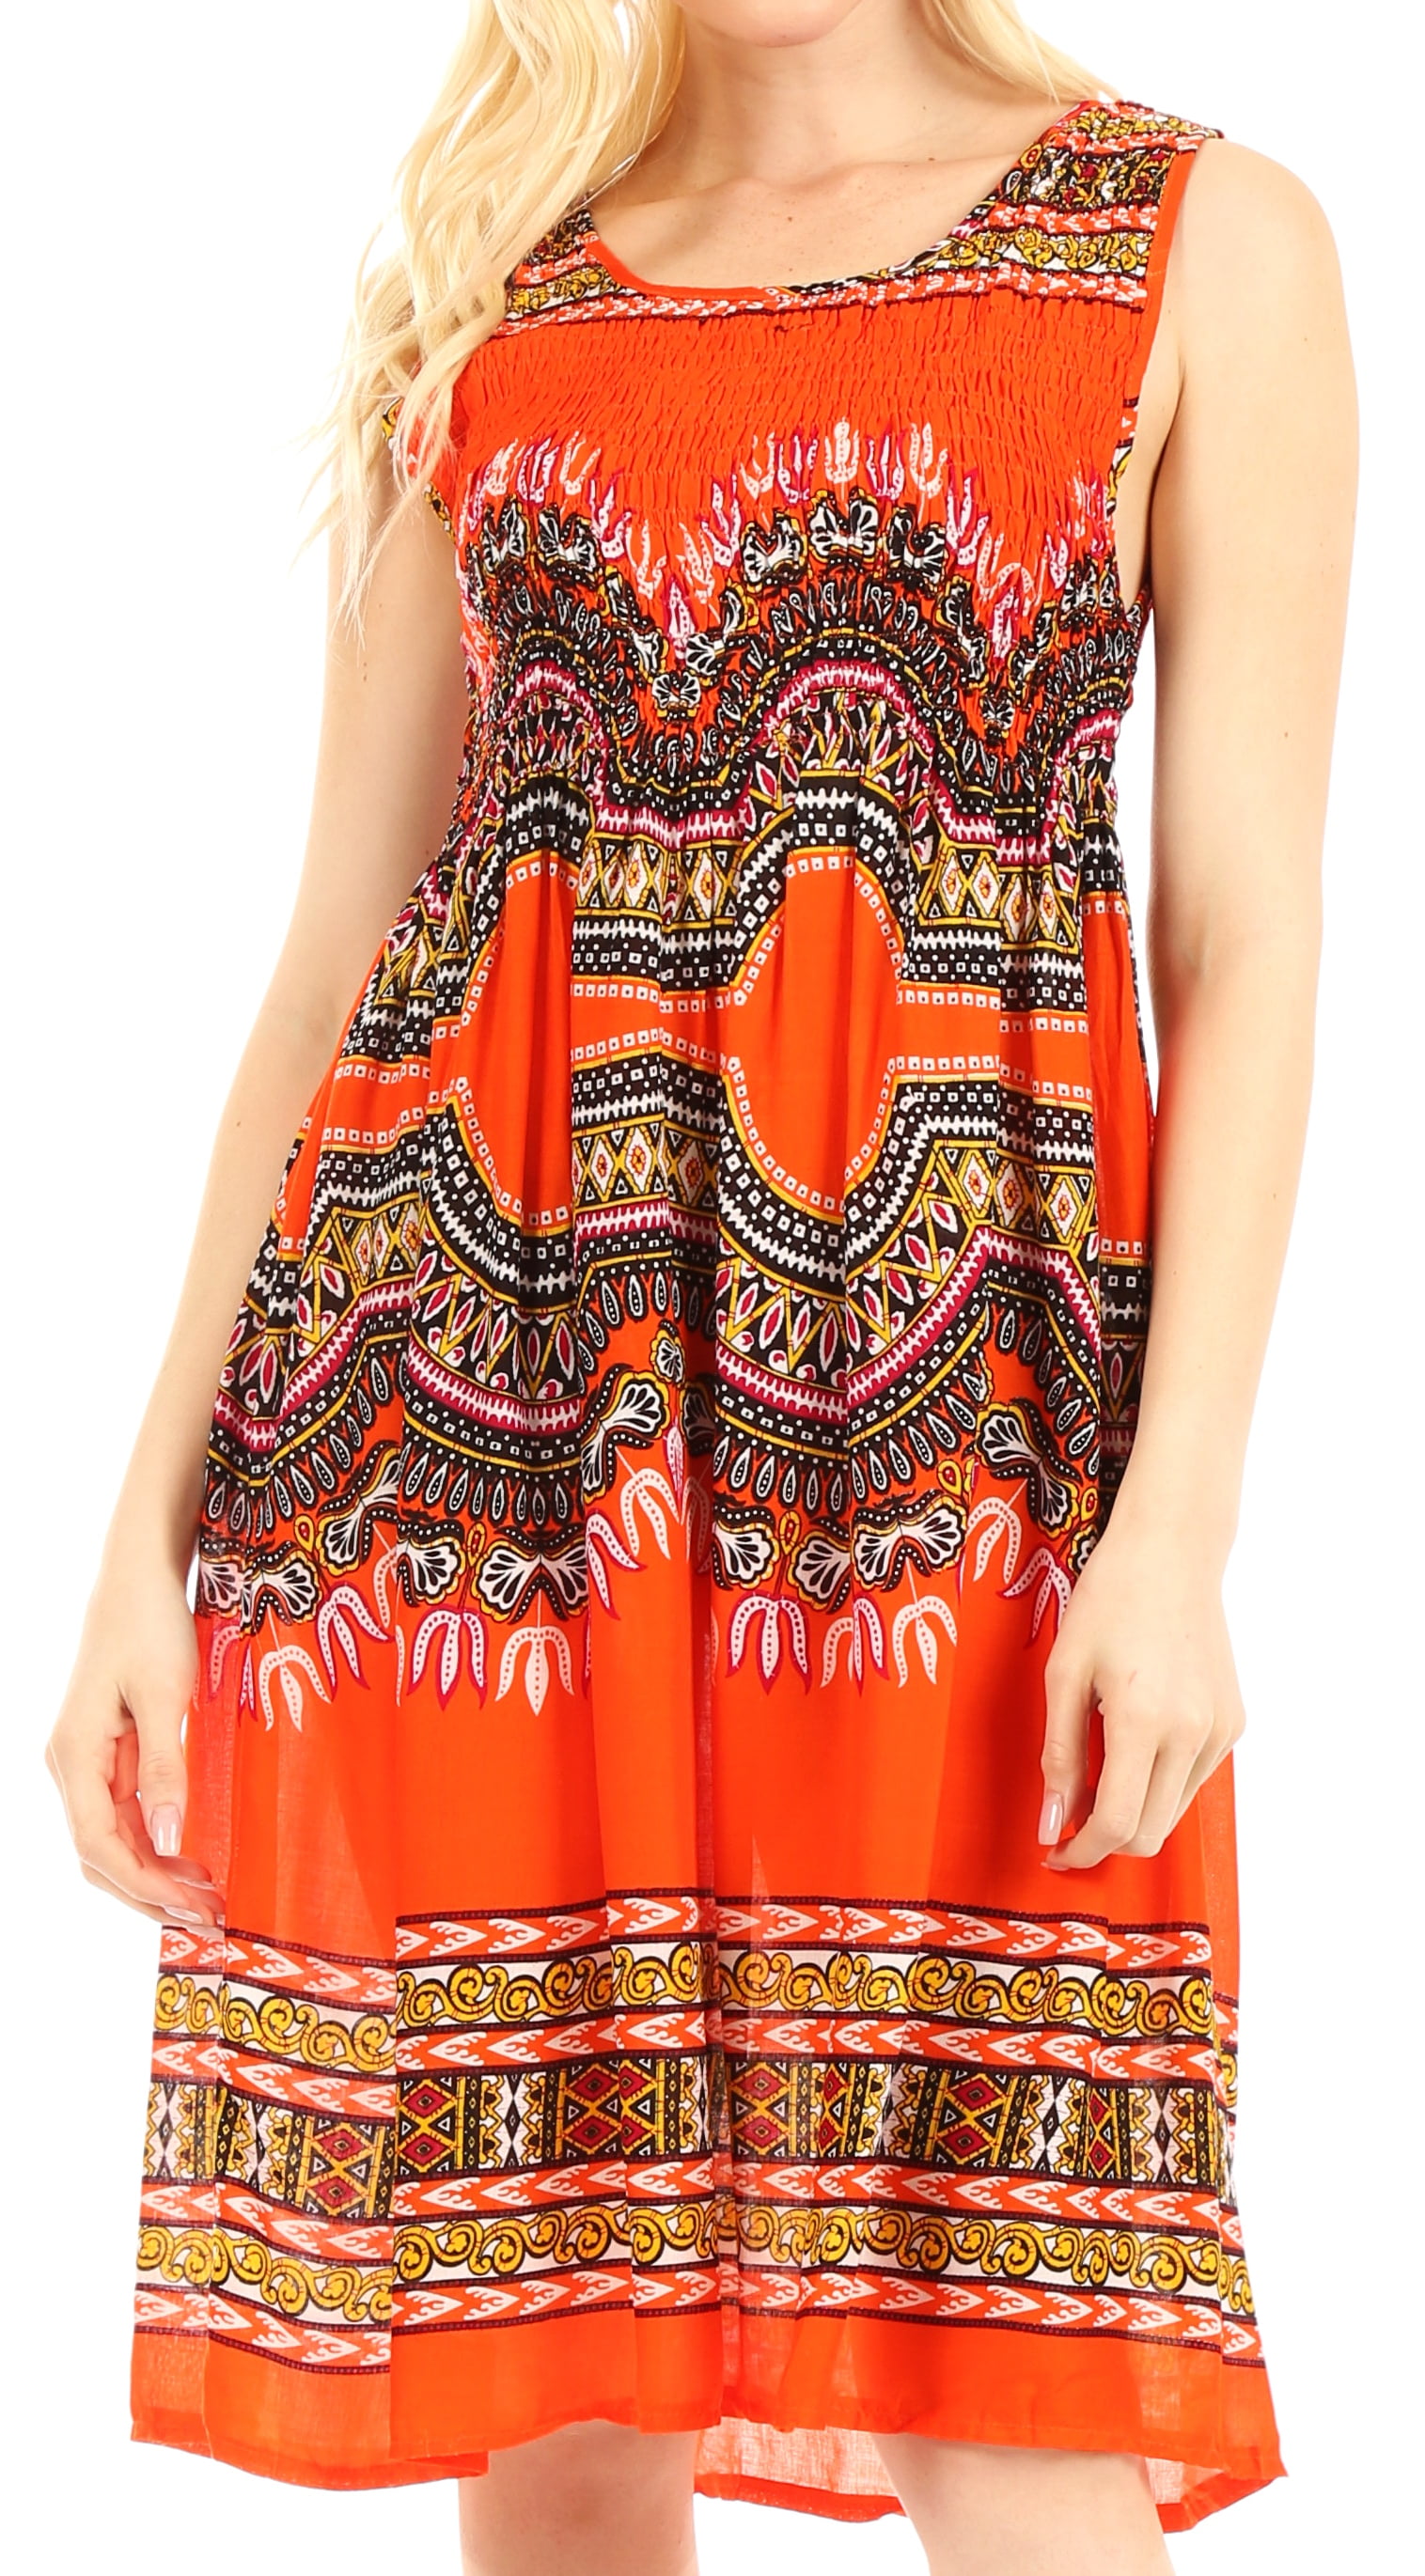 Sakkas Darcia Women's Summer Cocktail Elastic Stretchy Dashiki Print Dress - Orange One Size Walmart.com